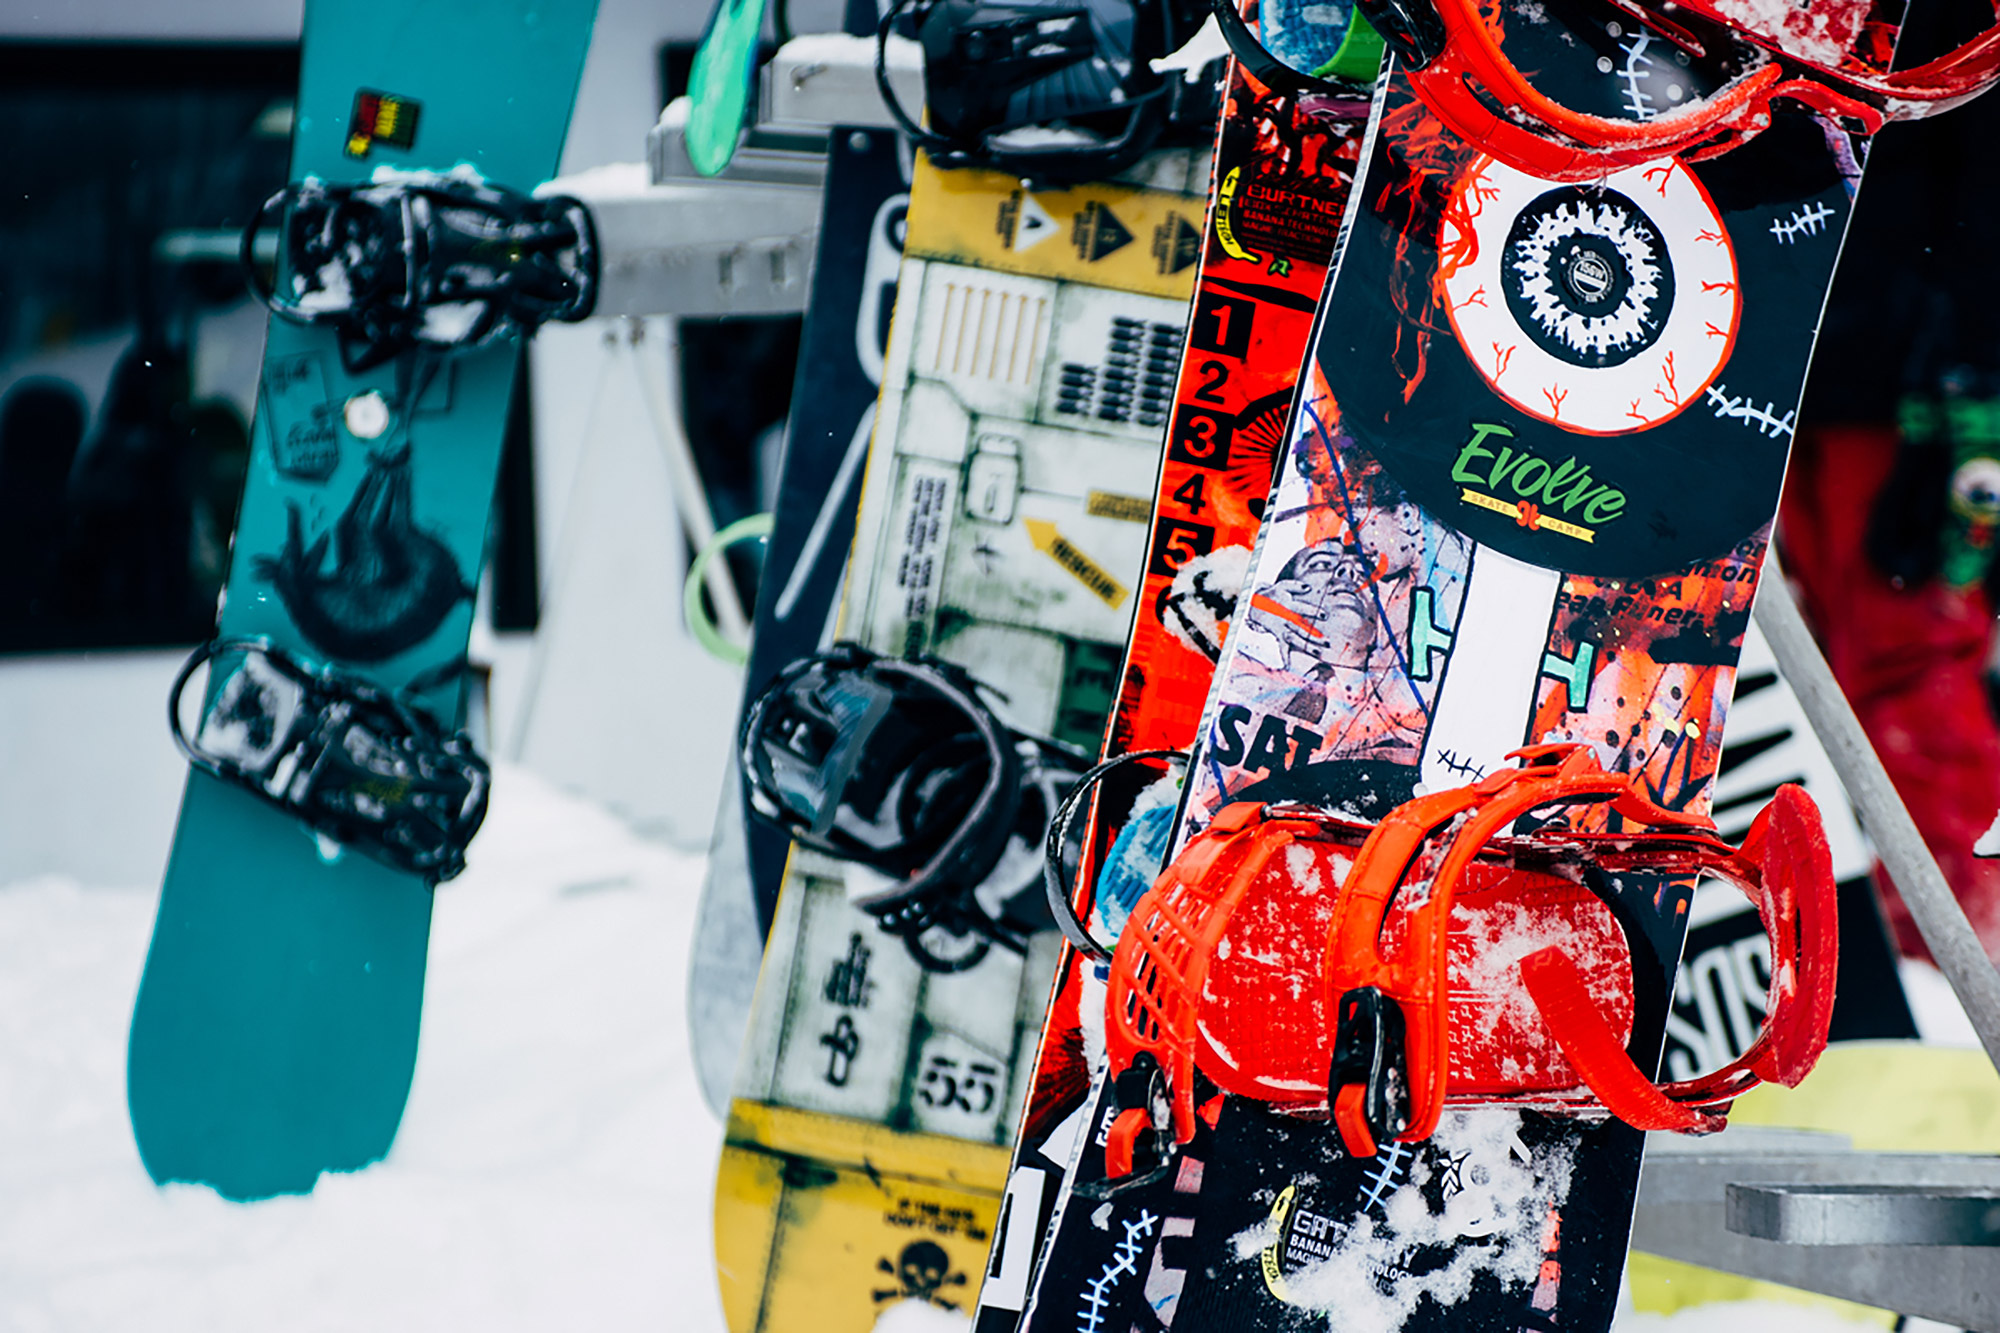 The World’s Longest Indoor Ski Slope